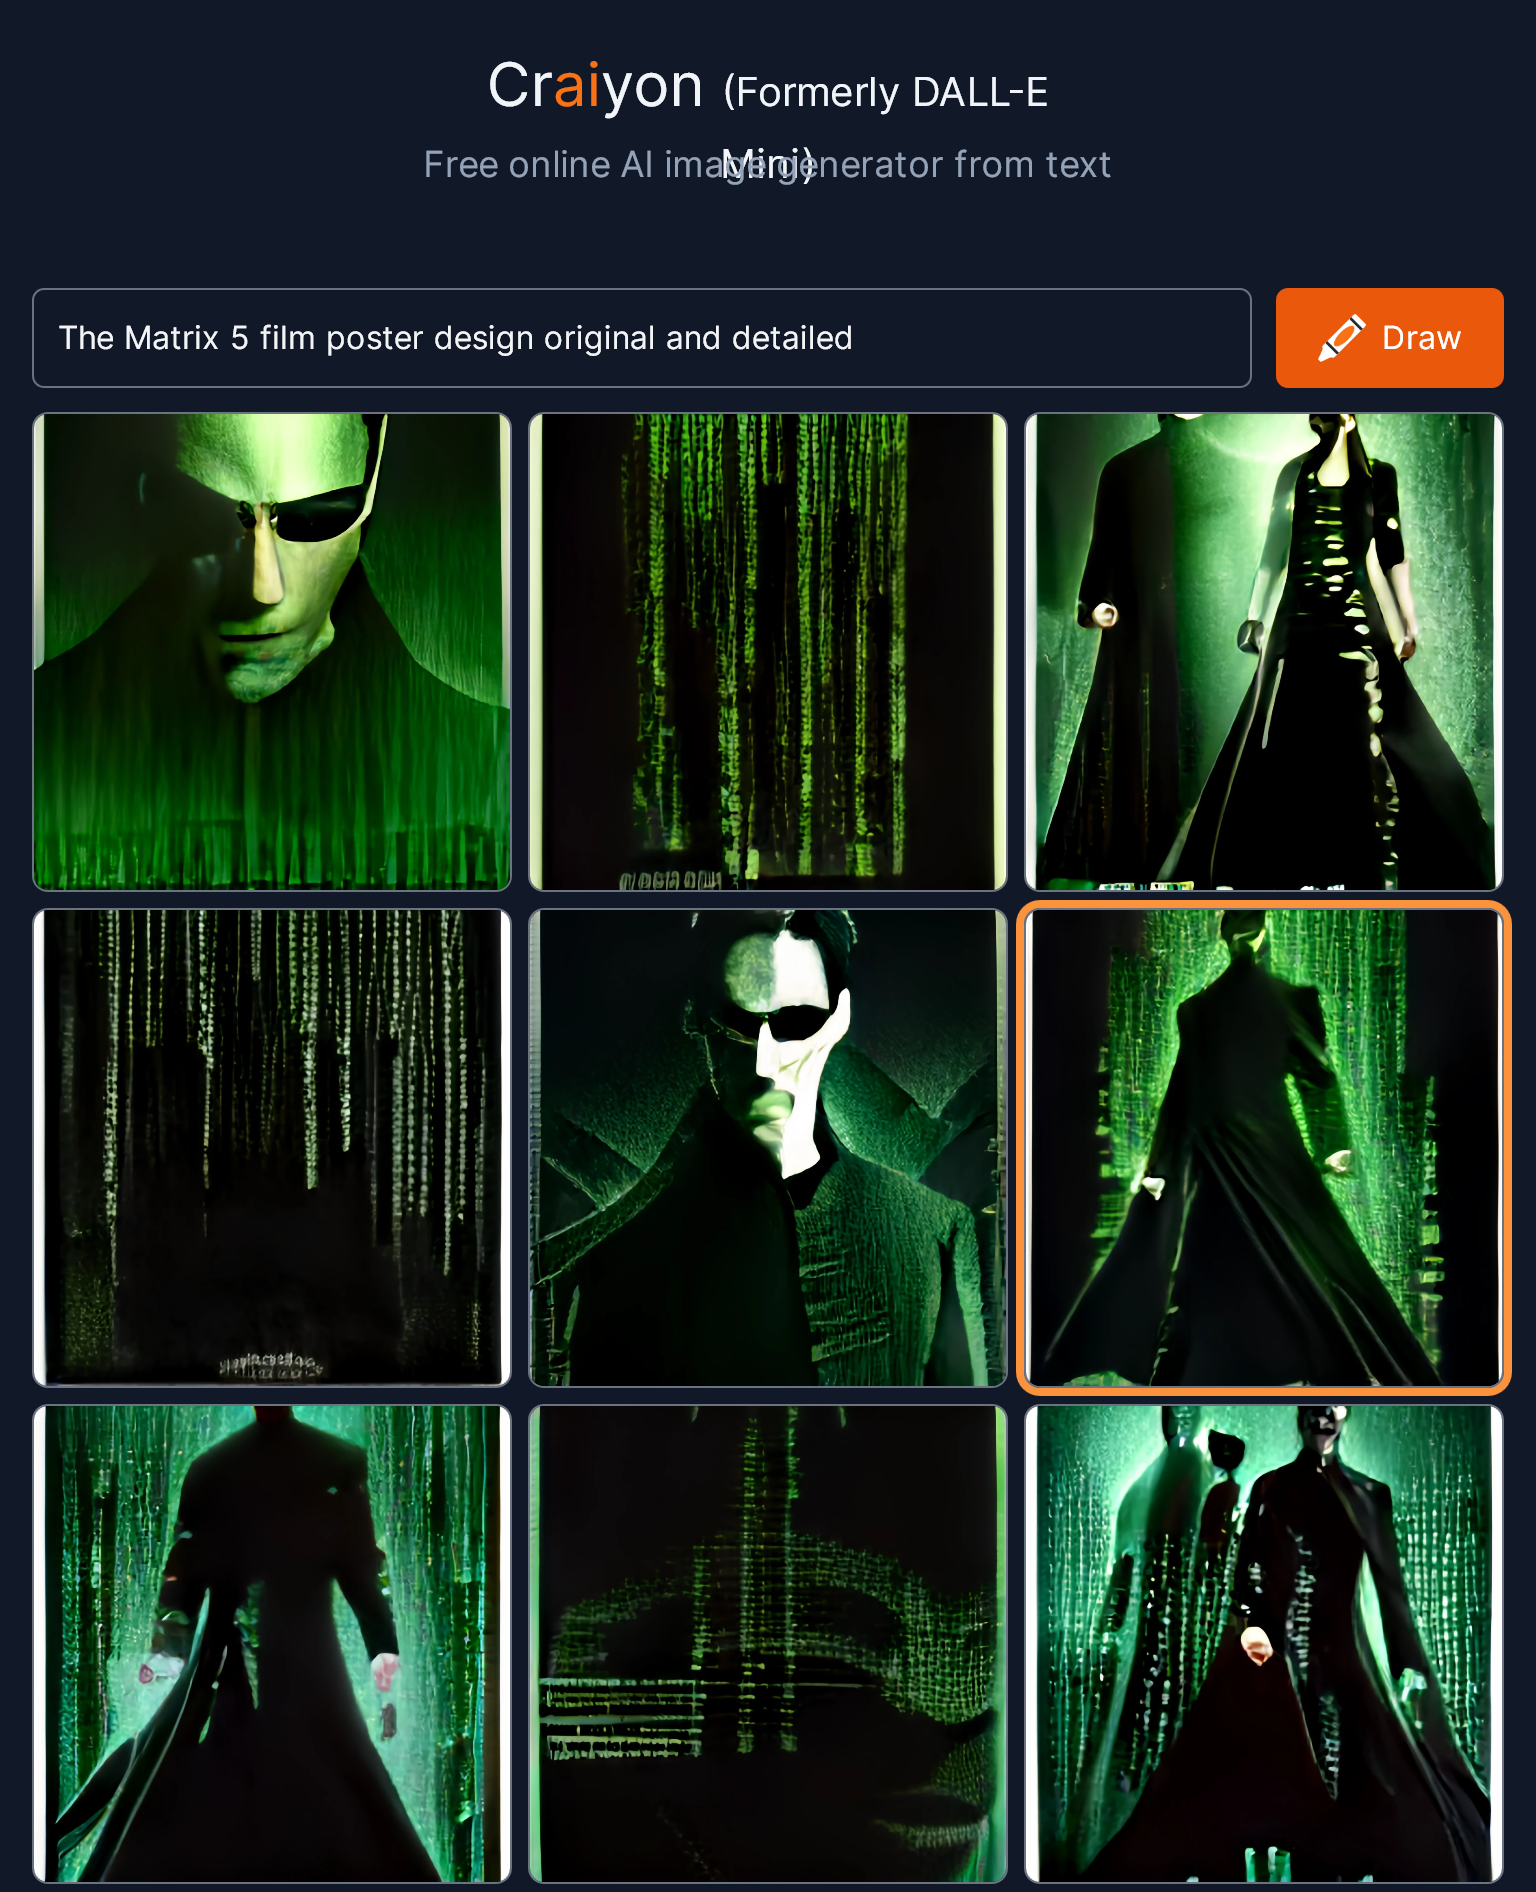 craiyon_180537_The_Matrix_5_film_poster_design_original_and_detailed.png